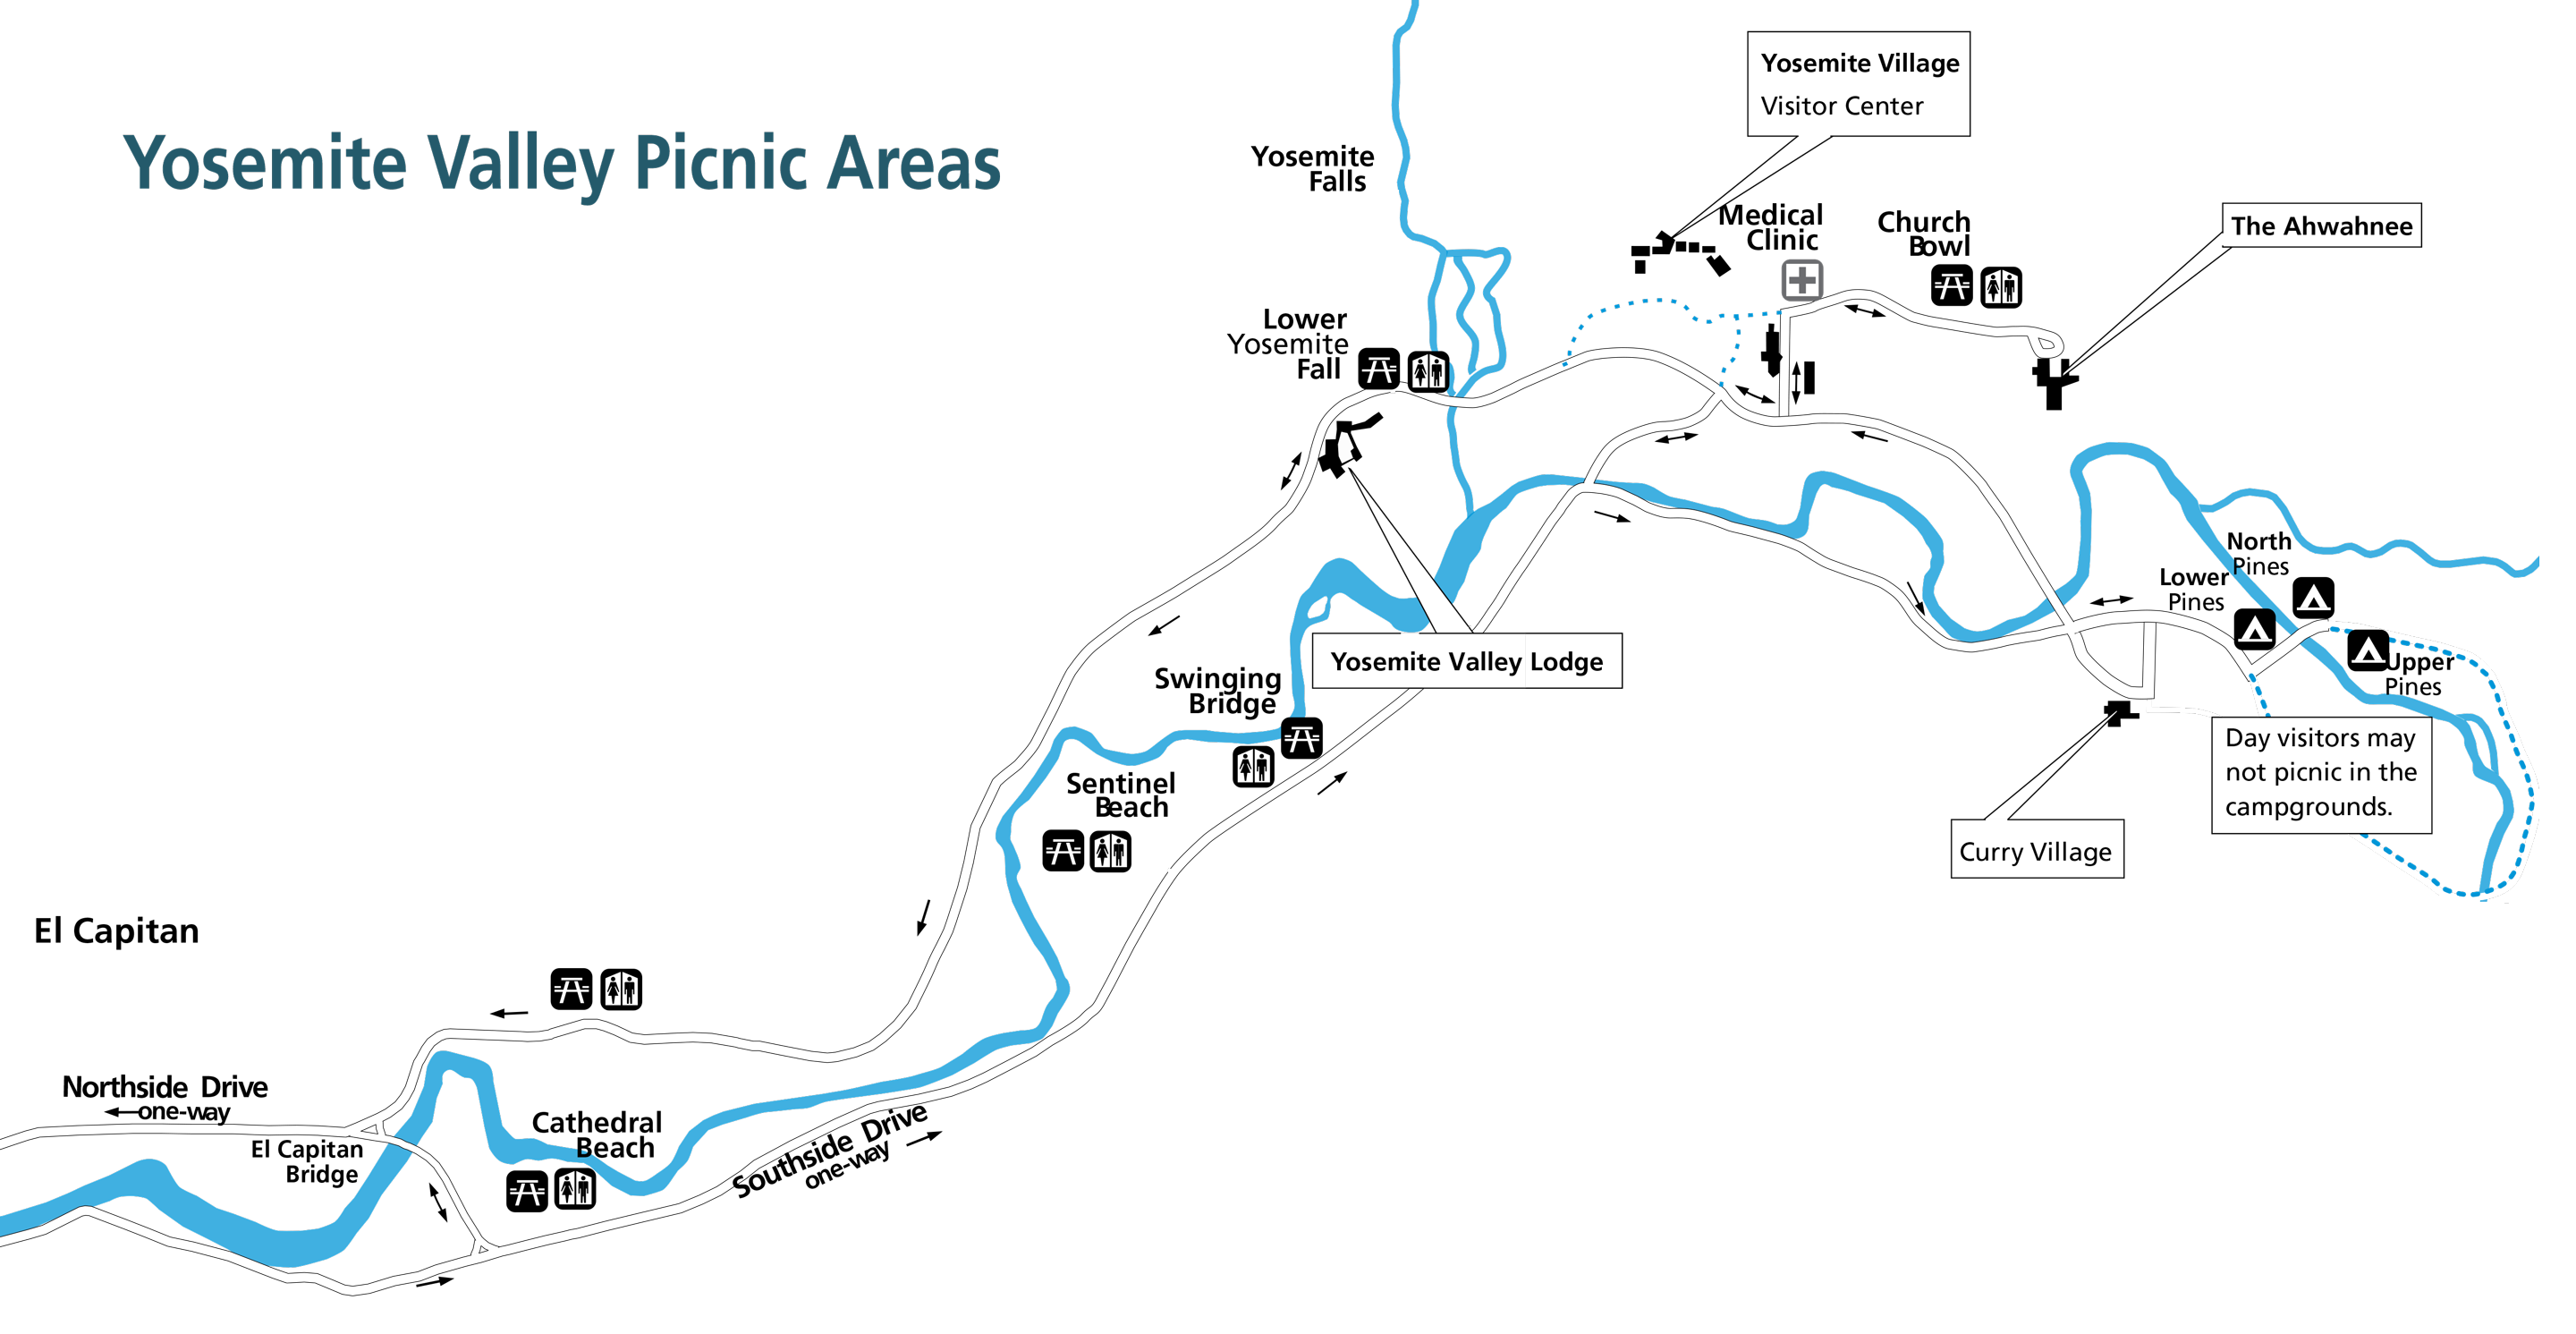 Map showing picnic aras at El Capitan, Cathedral Beach, Sentinel Beach, Swinging Bridge, Lower Yosemite Fall, and Church Bowl